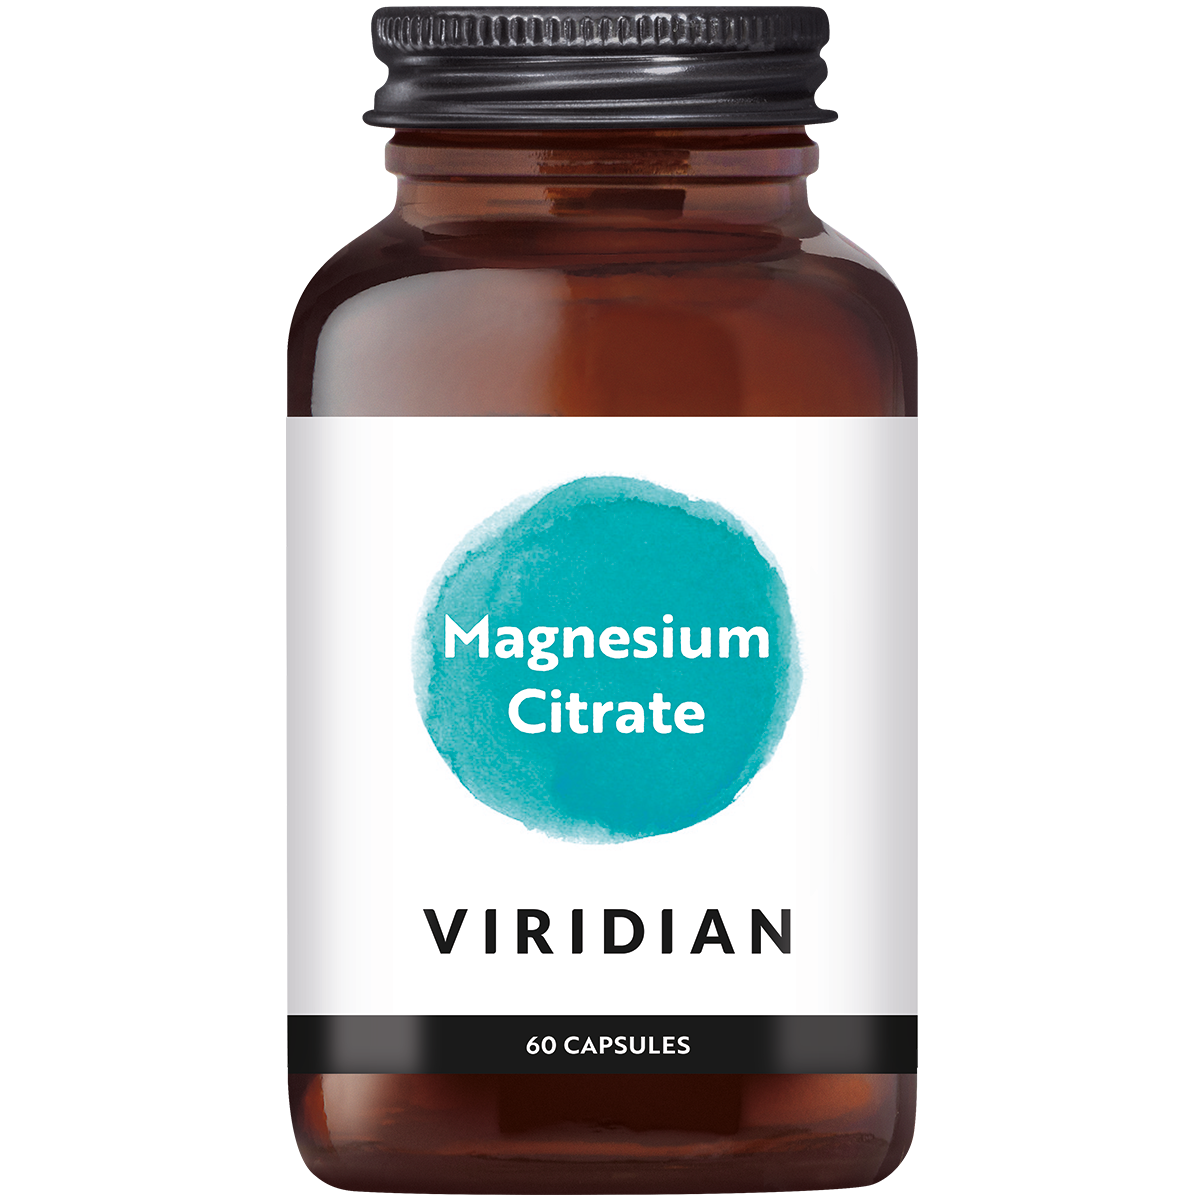 Viridian Magnesium Citrate capsules (120 stuks)